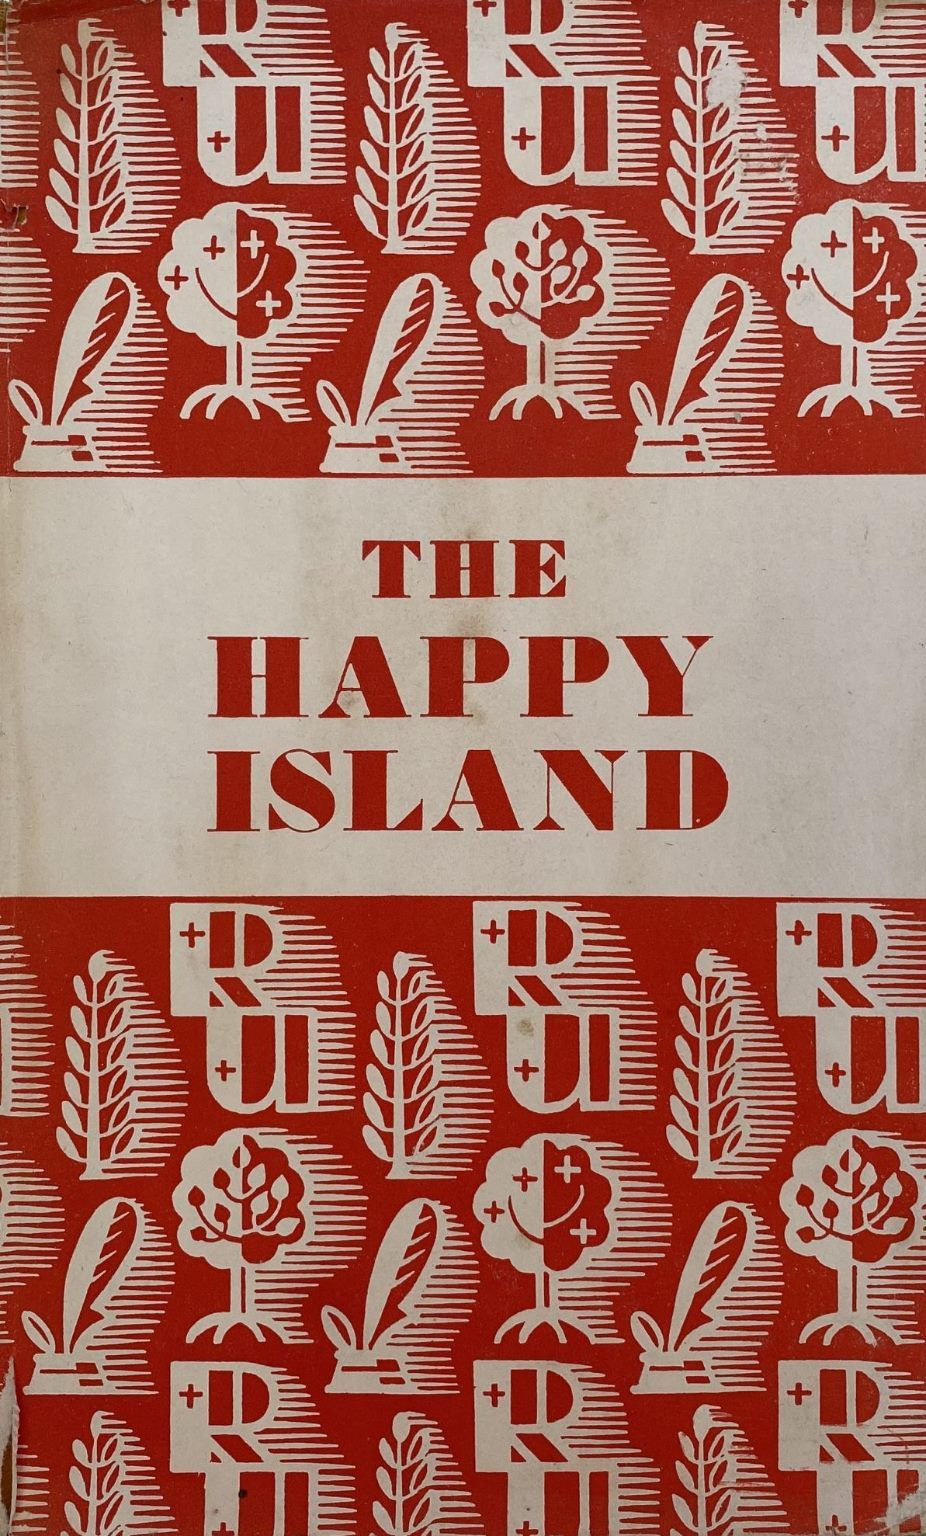 THE HAPPY ISLAND